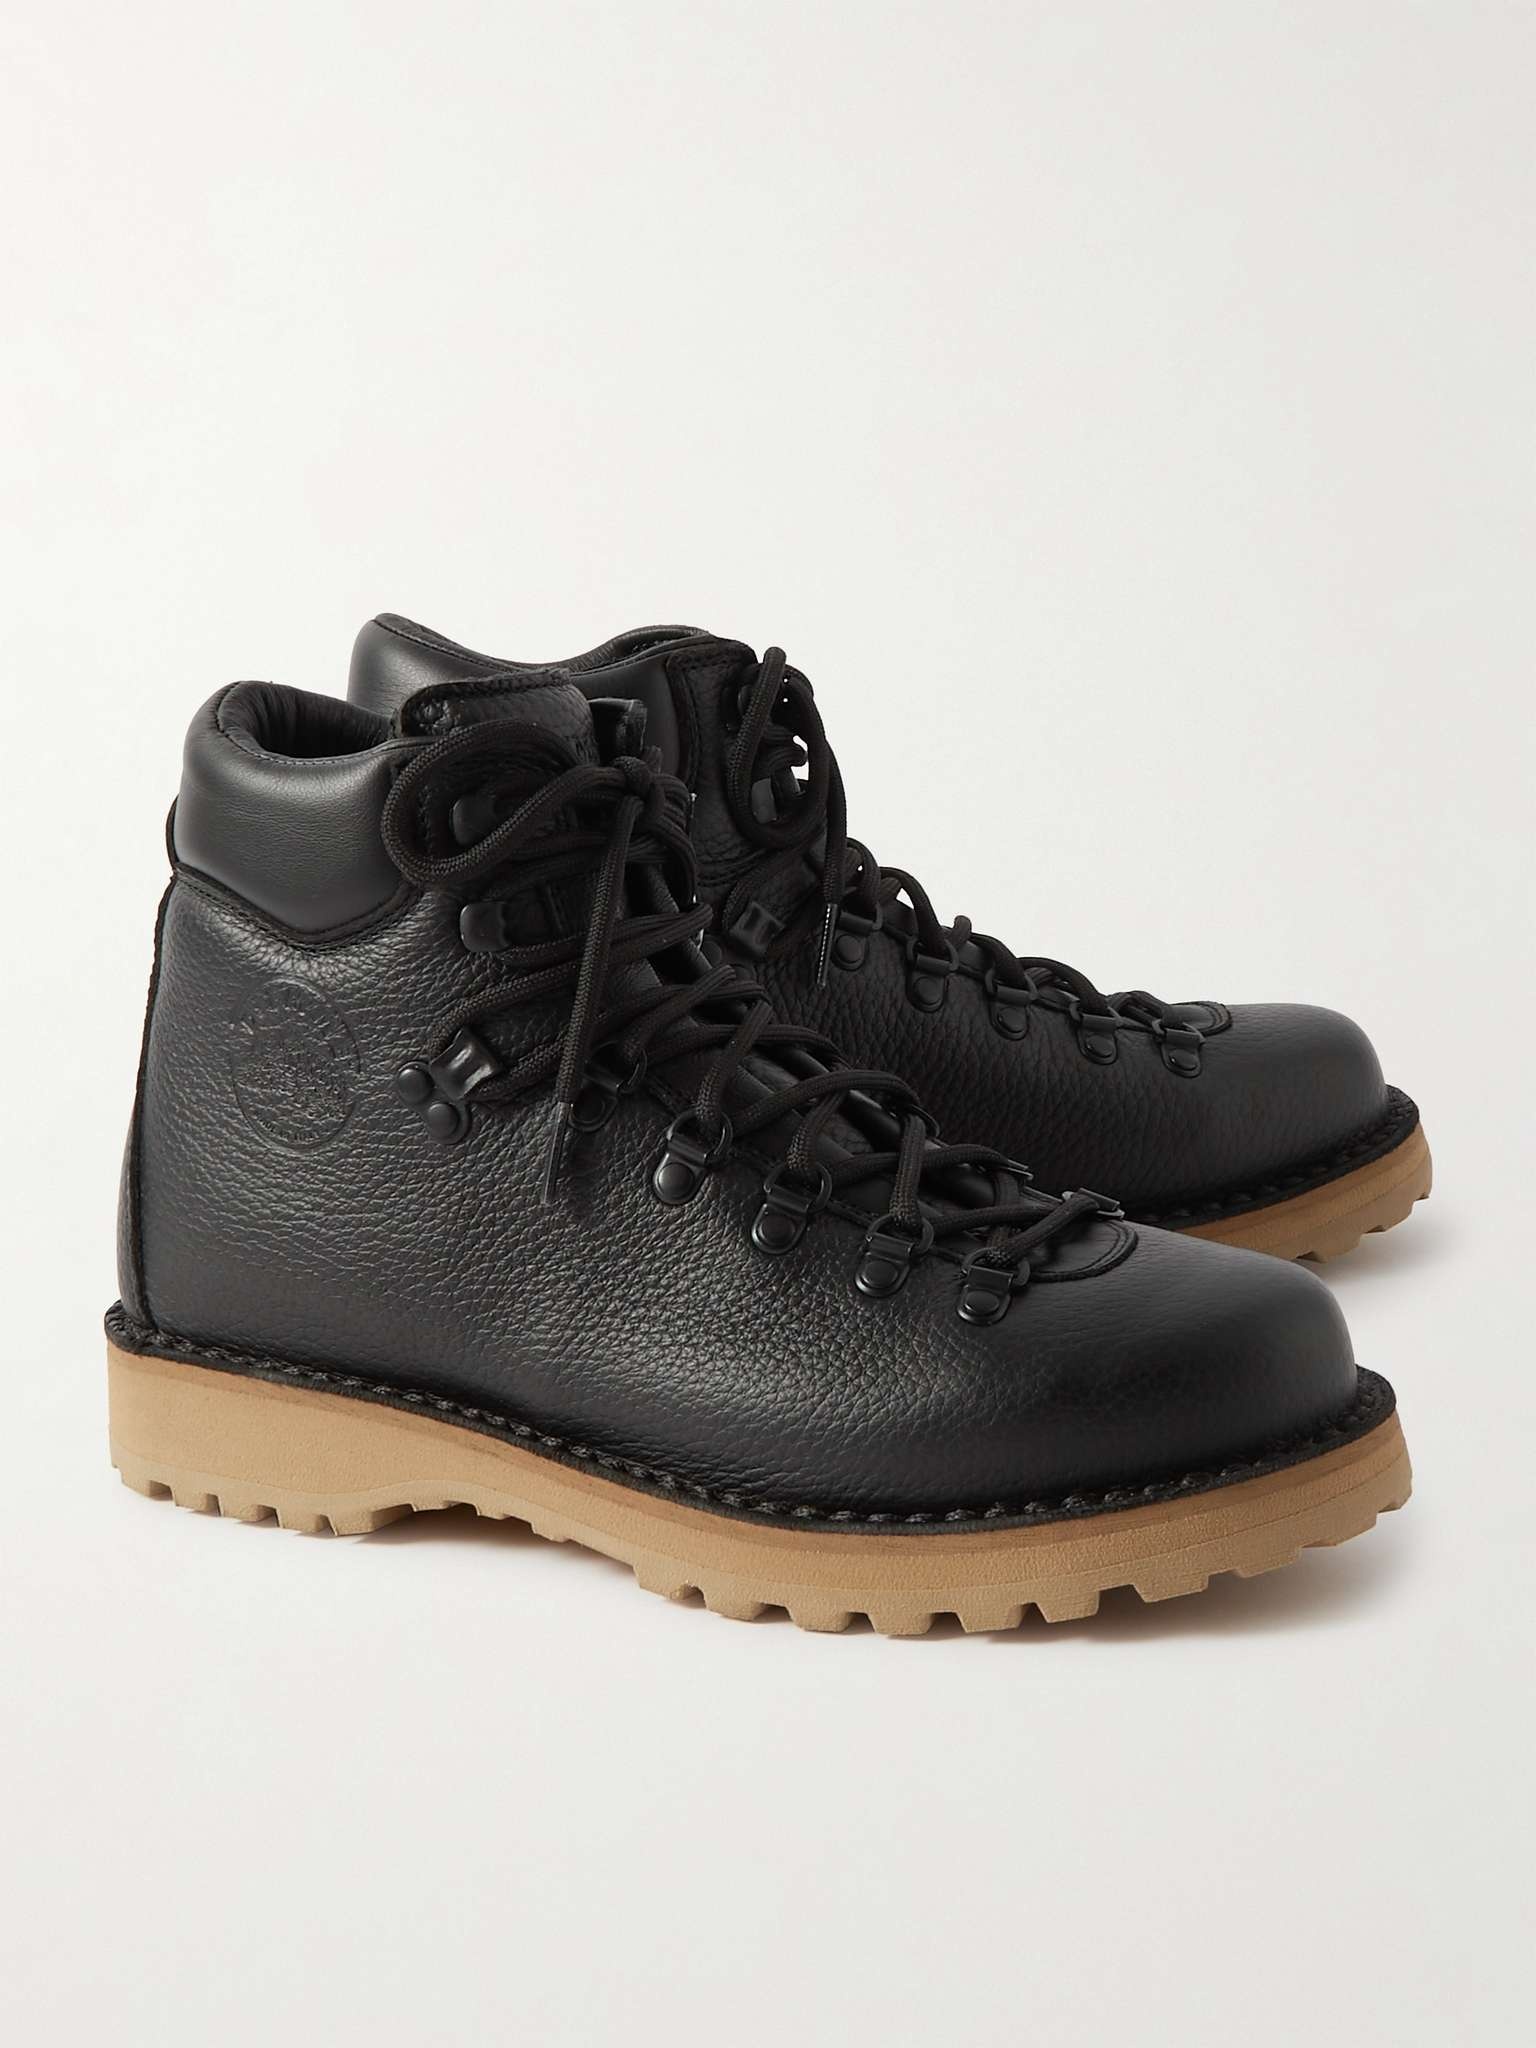 Roccia Vet Full-Grain Leather Hiking Boots - 4